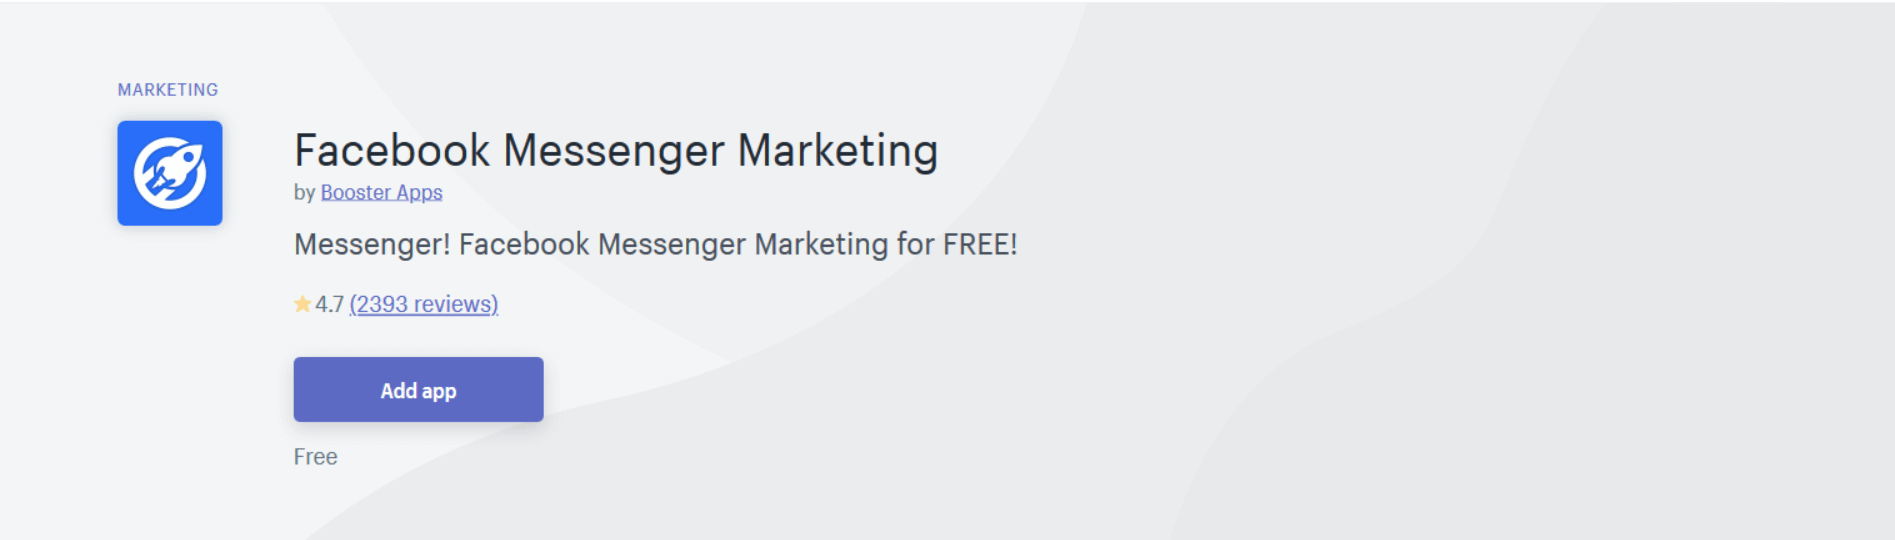 Facebook Messenger Marketing 